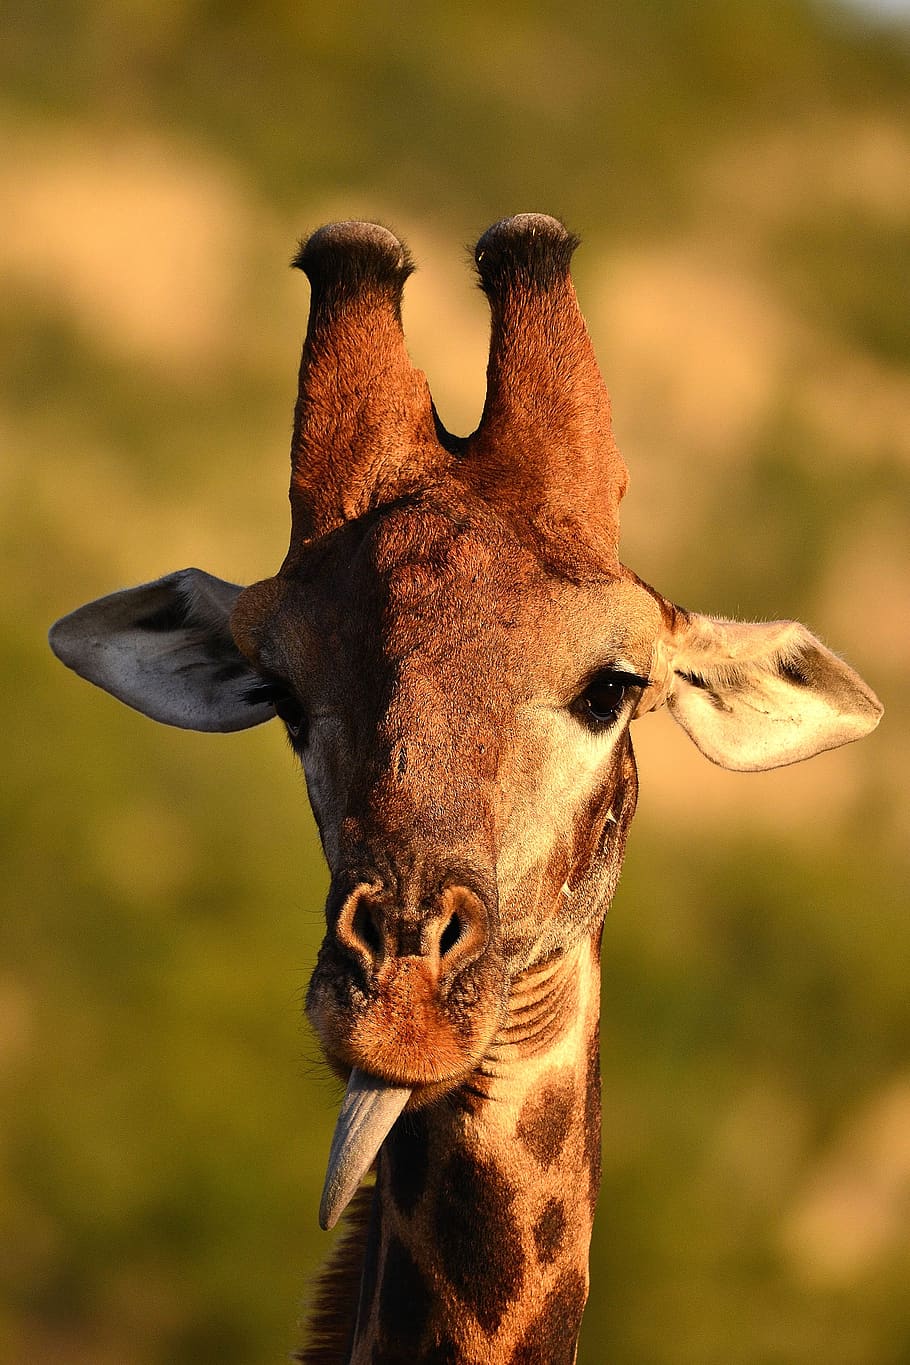 south africa, wildlife, giraffe, africa, safari, nature, animal themes, animal, mammal, one animal